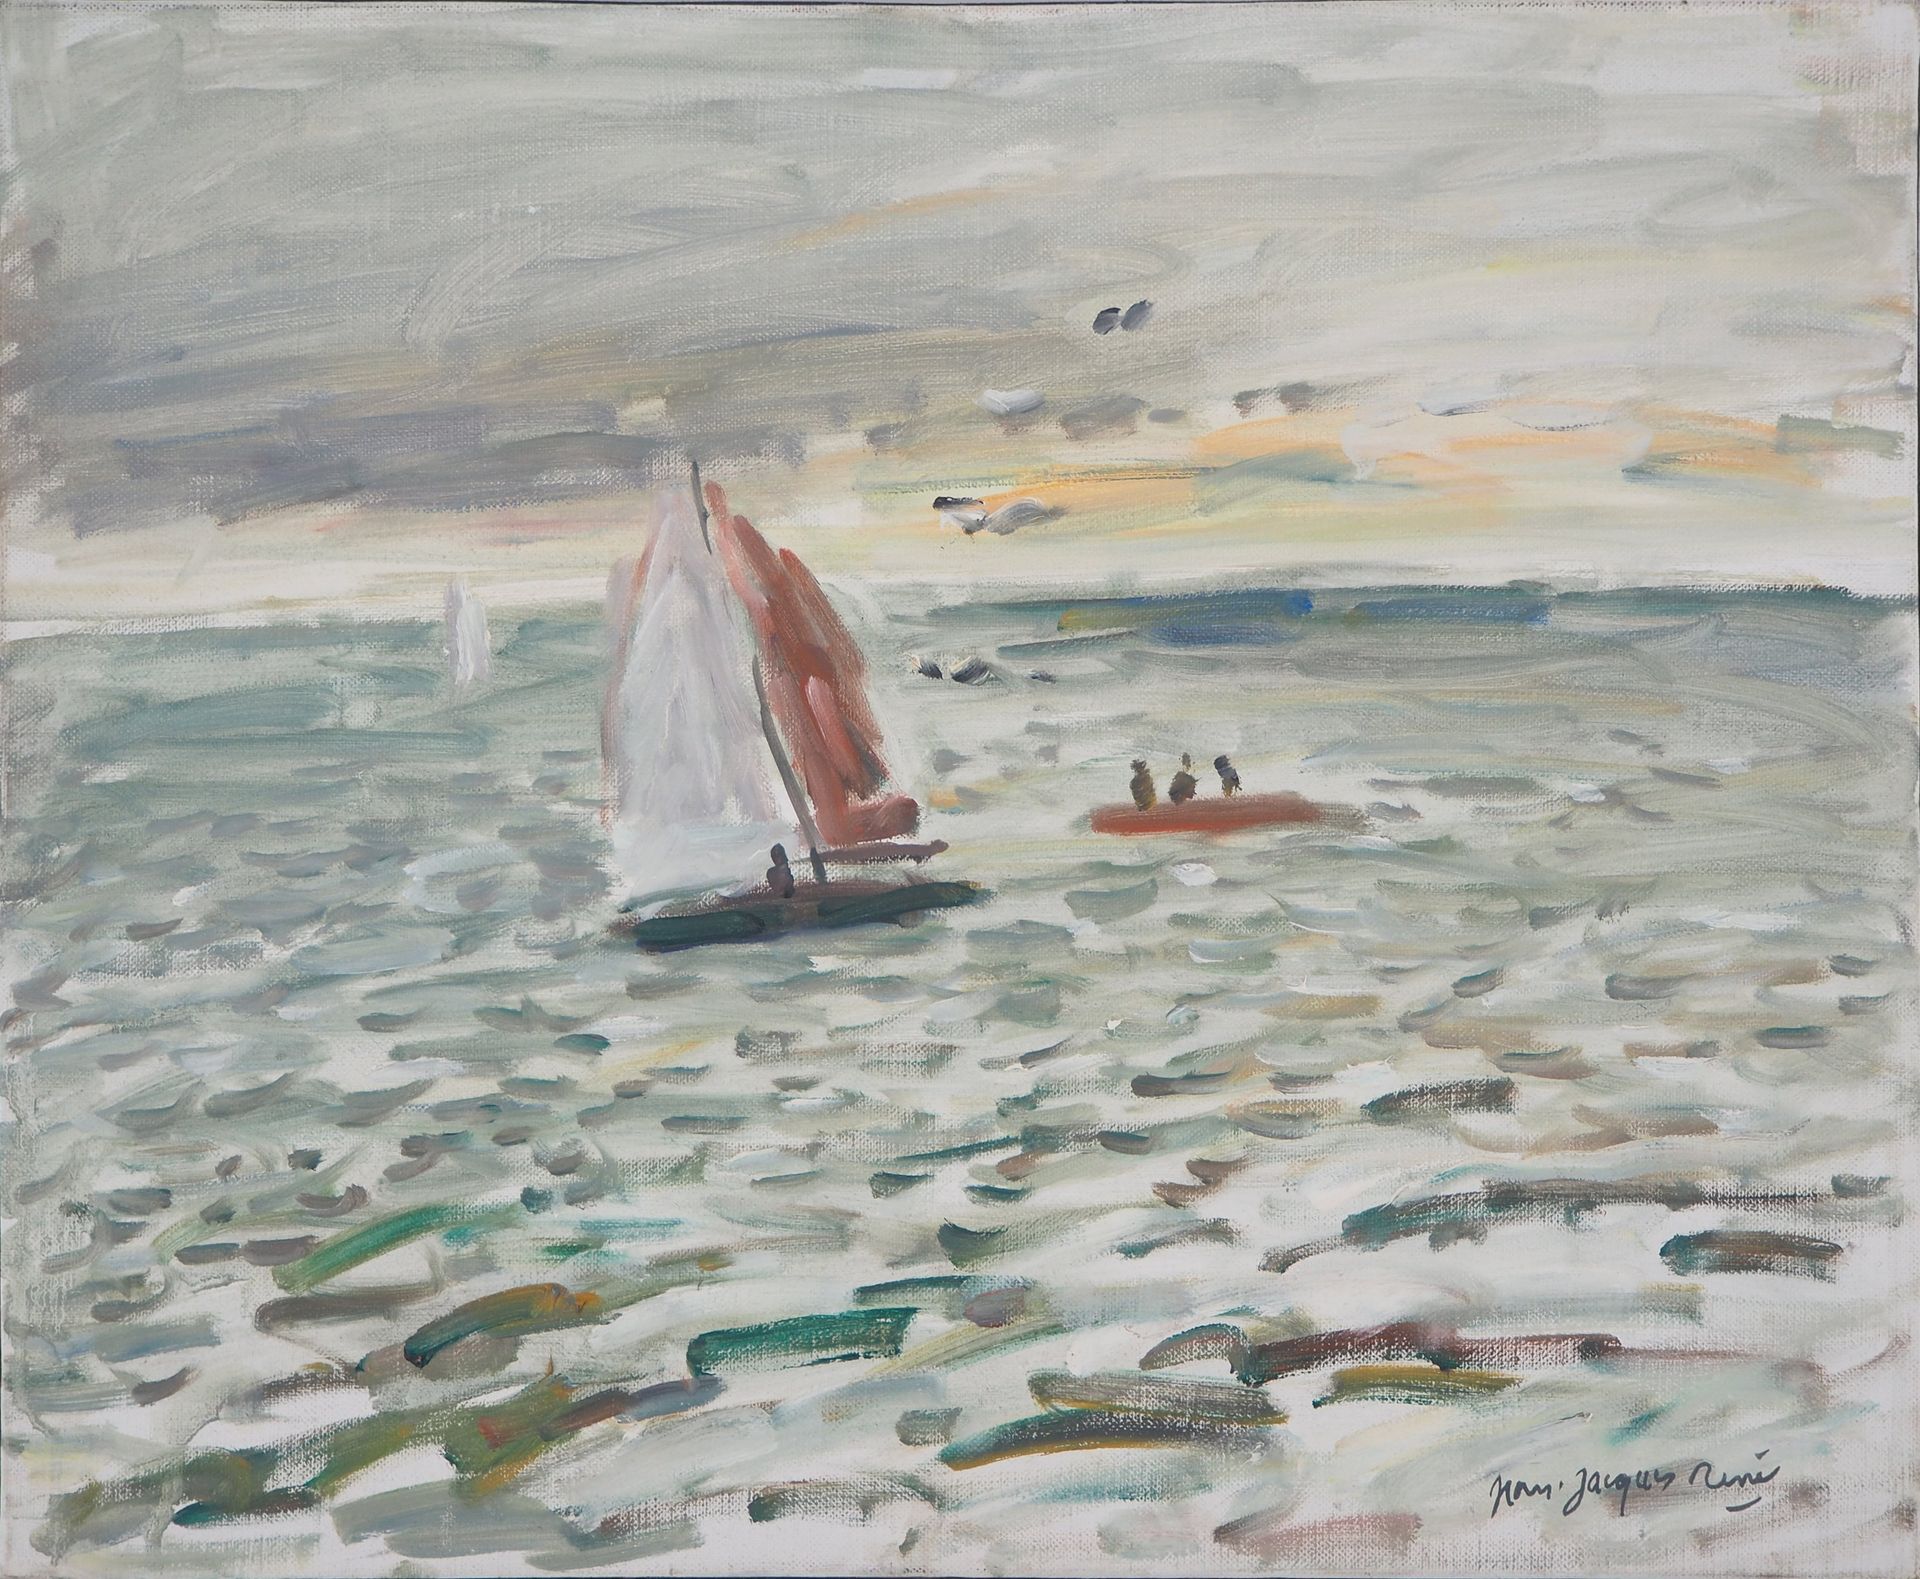 Jean-Jacques RENE Jean-Jacques RENÉ (1943)

Velero en el mar

Óleo sobre lienzo
&hellip;